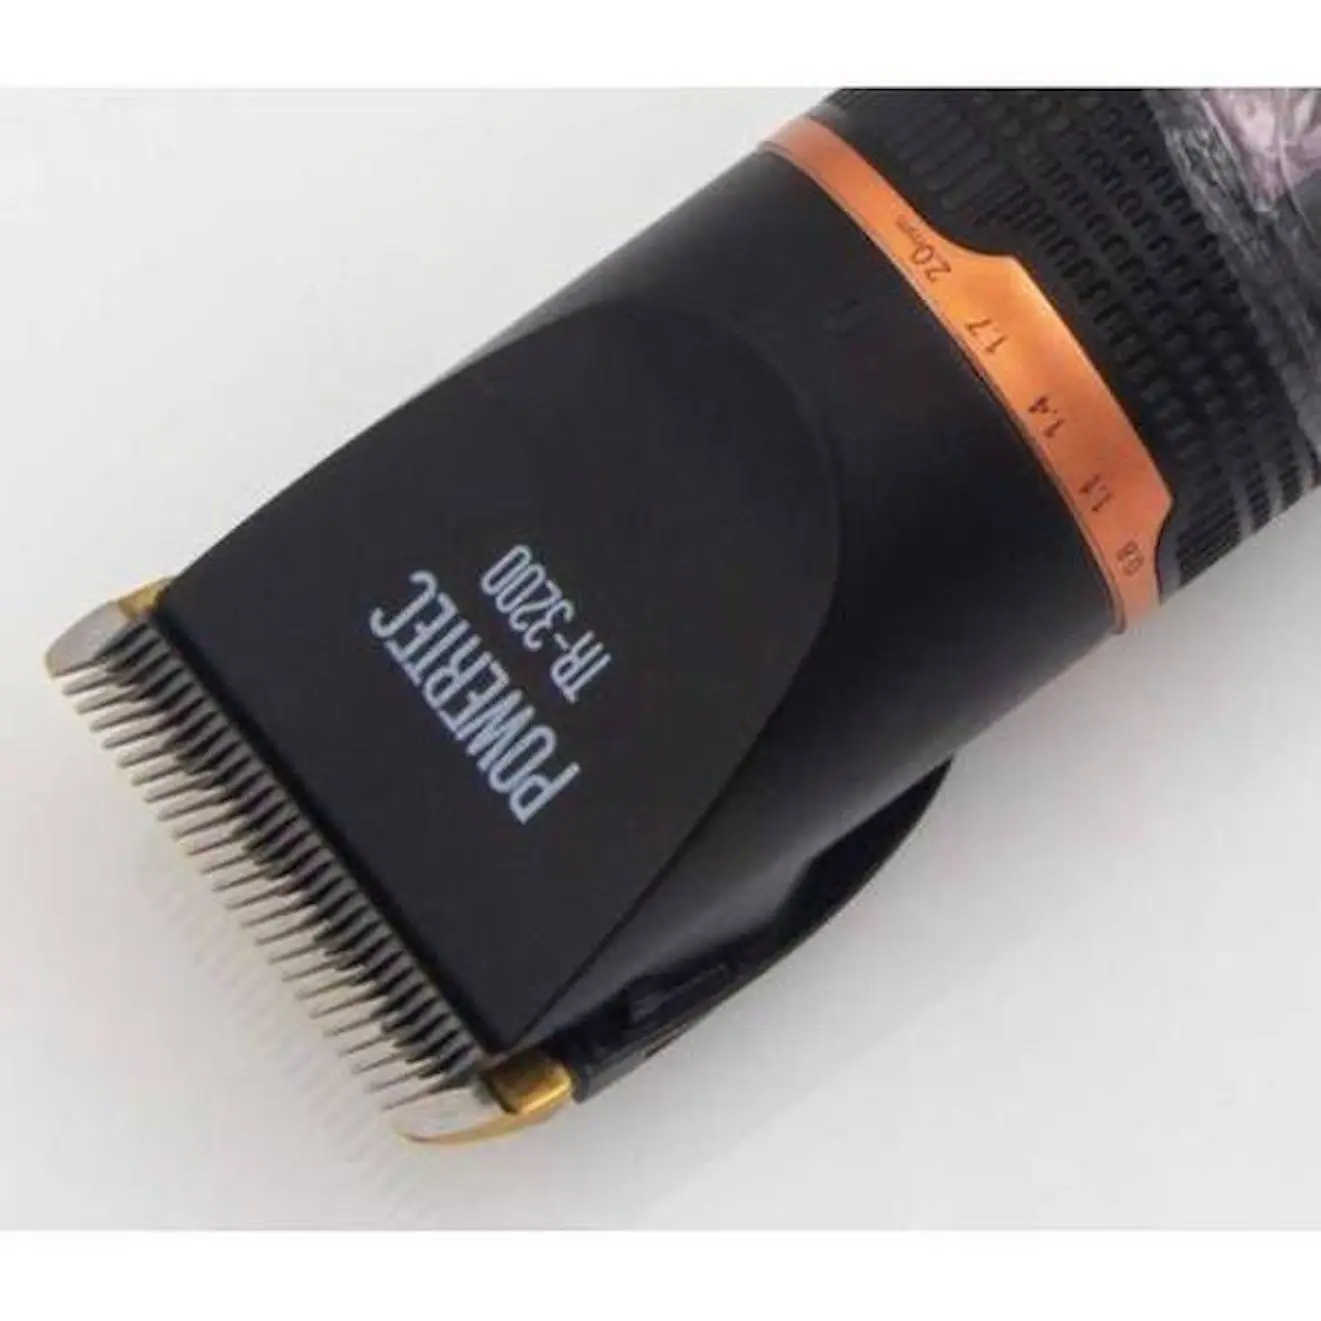 Powertec TR-3200 Wireless Rechargeable Professional Hair Beard Neck Body Trimmer Shaver hair beard shaver nape neck shaver enlarge